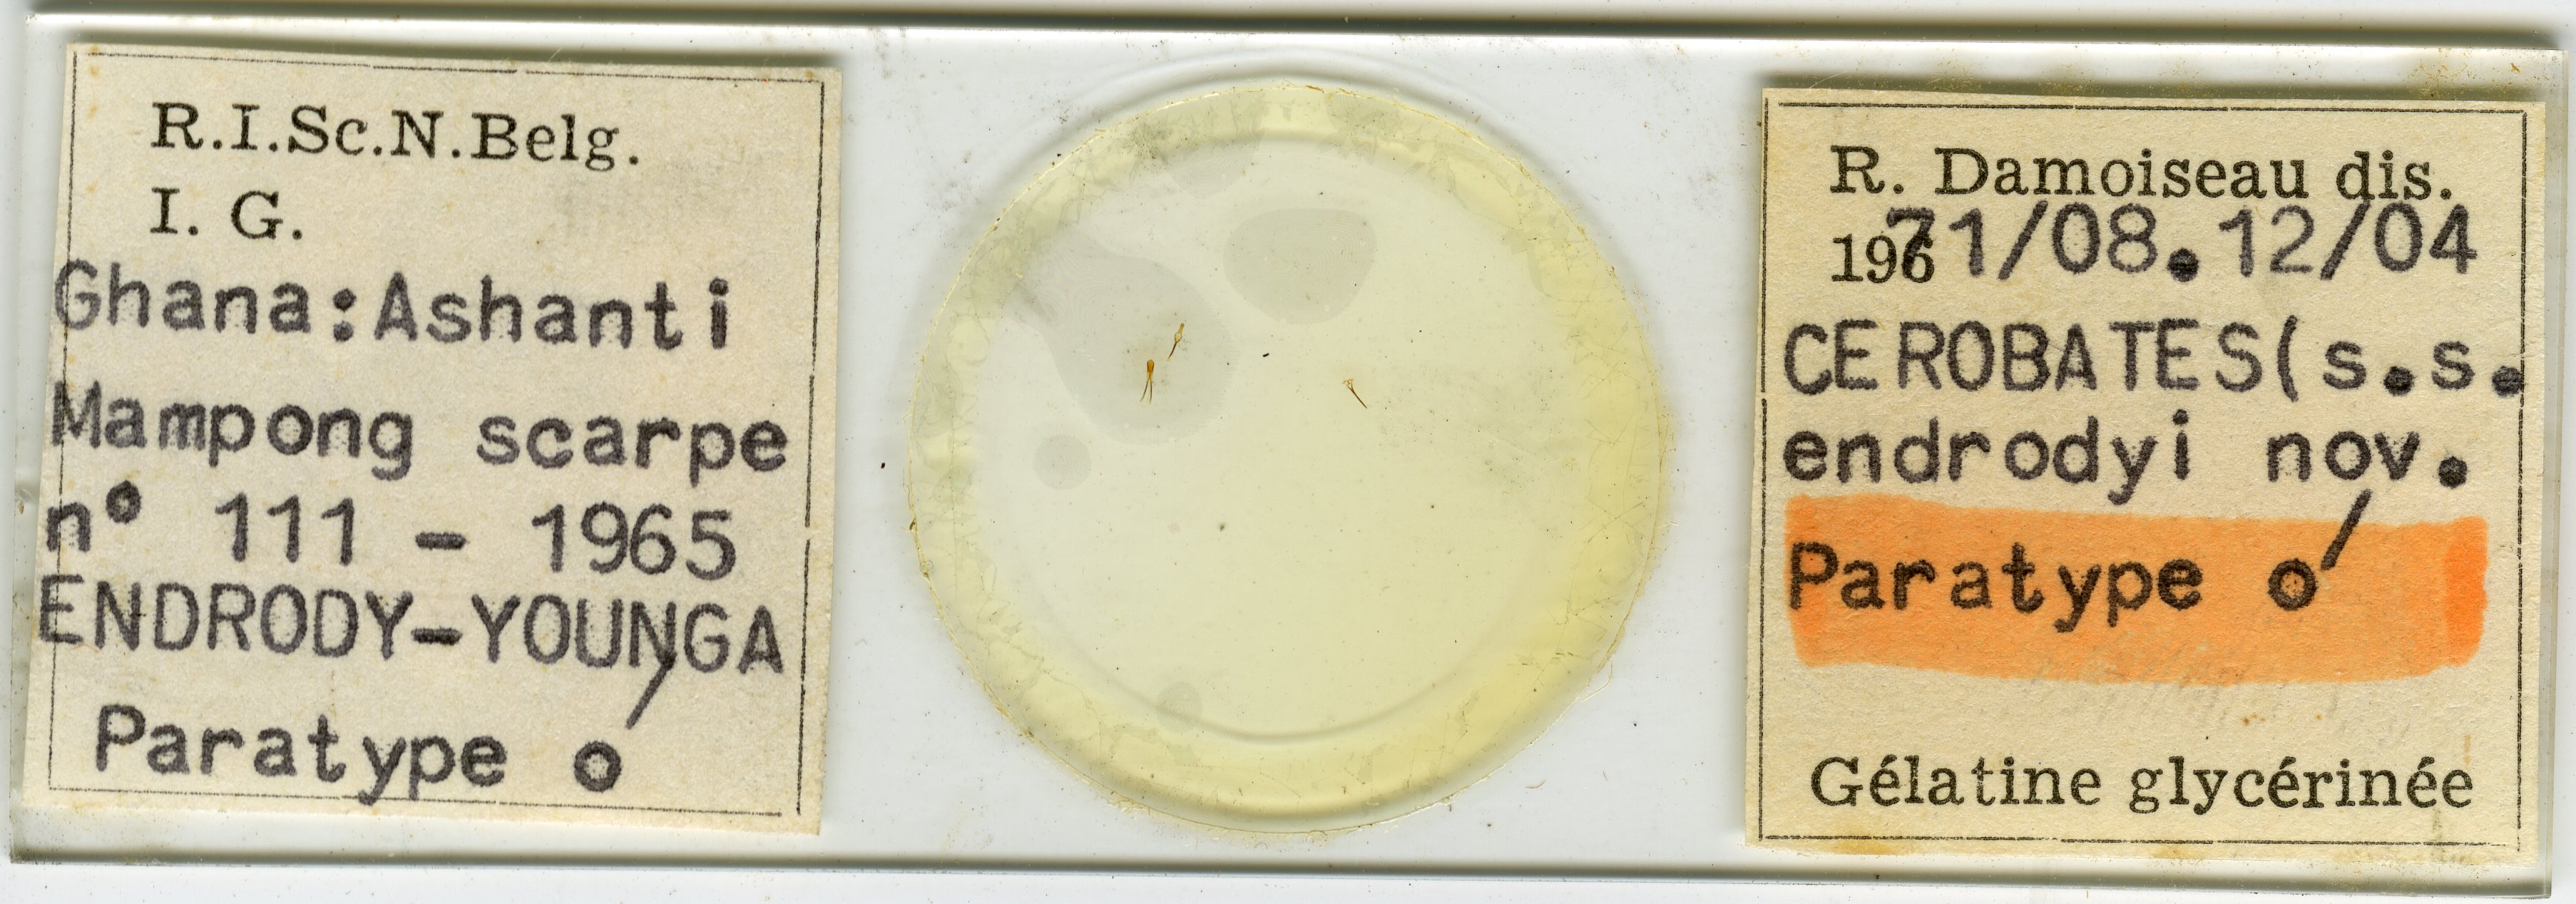 Cerobates (Cerobates) endrodyi pt Microscopic preparation.jpg